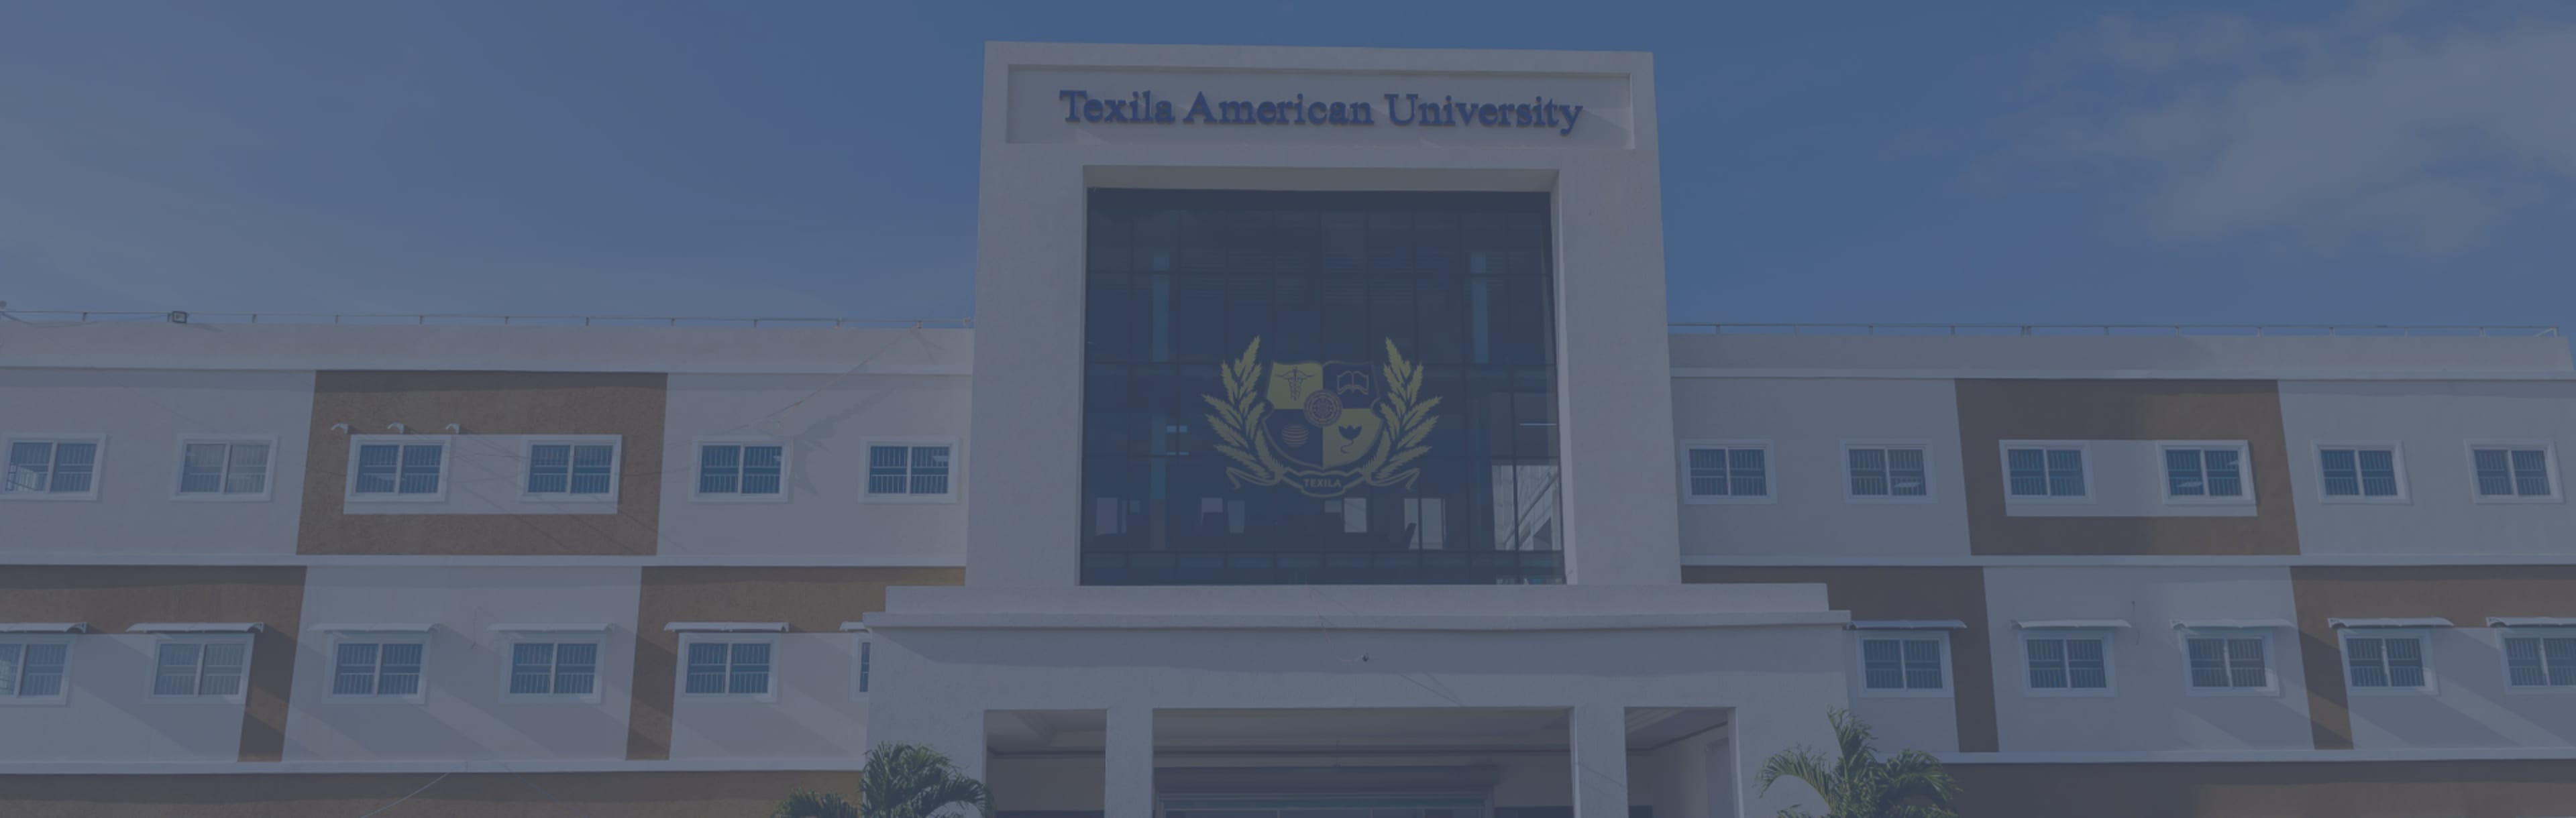 Texila American University